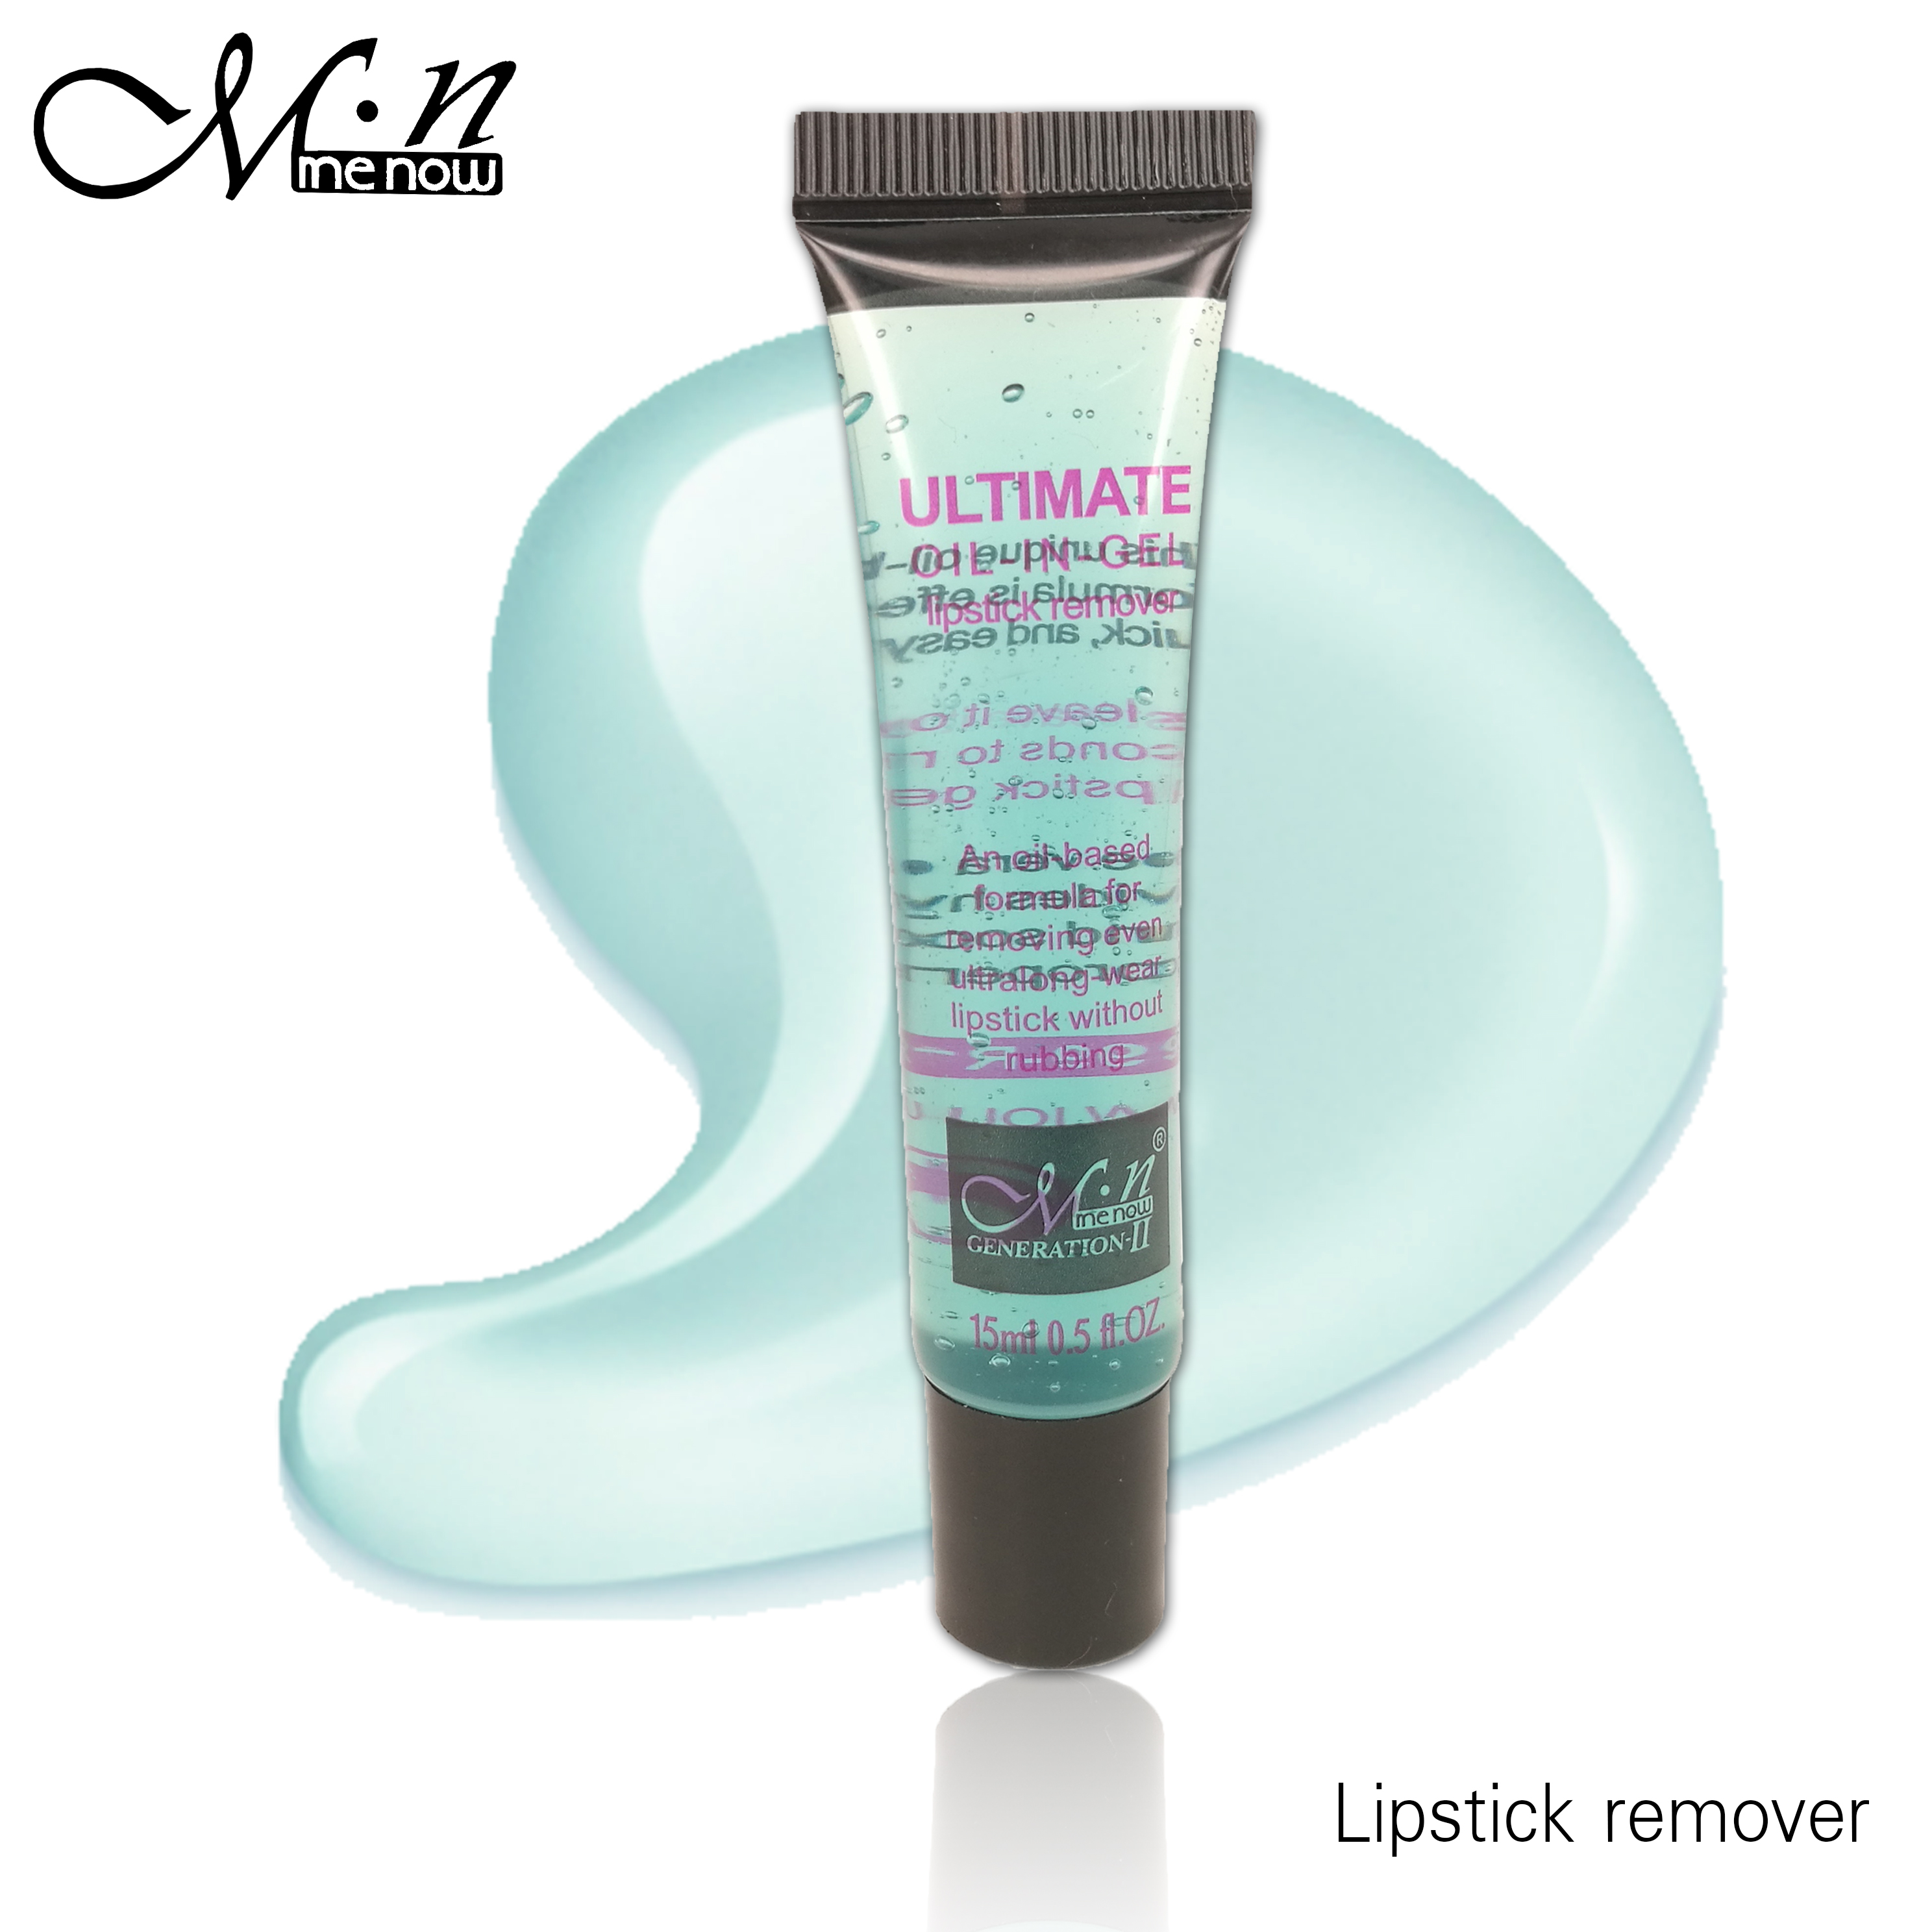 Menow Aloe Vera Extract Ultimate Oil-in-Gel Quick and Easy Lipstick Remover 15ml มีนาว เจลล้างเครื่องสำอางและลิปสติก